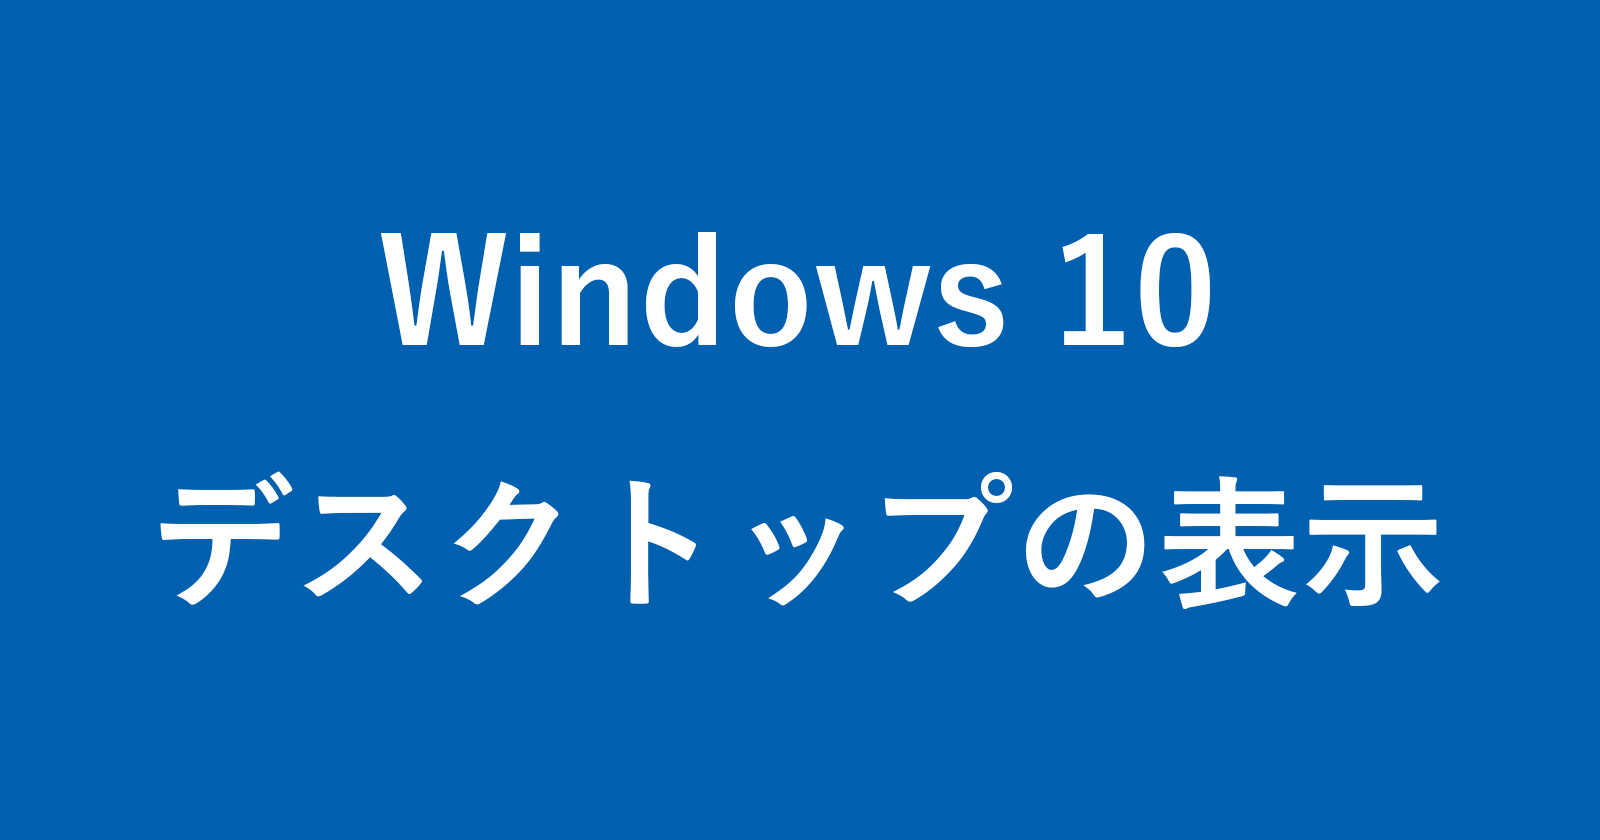 windows 10 show desktop